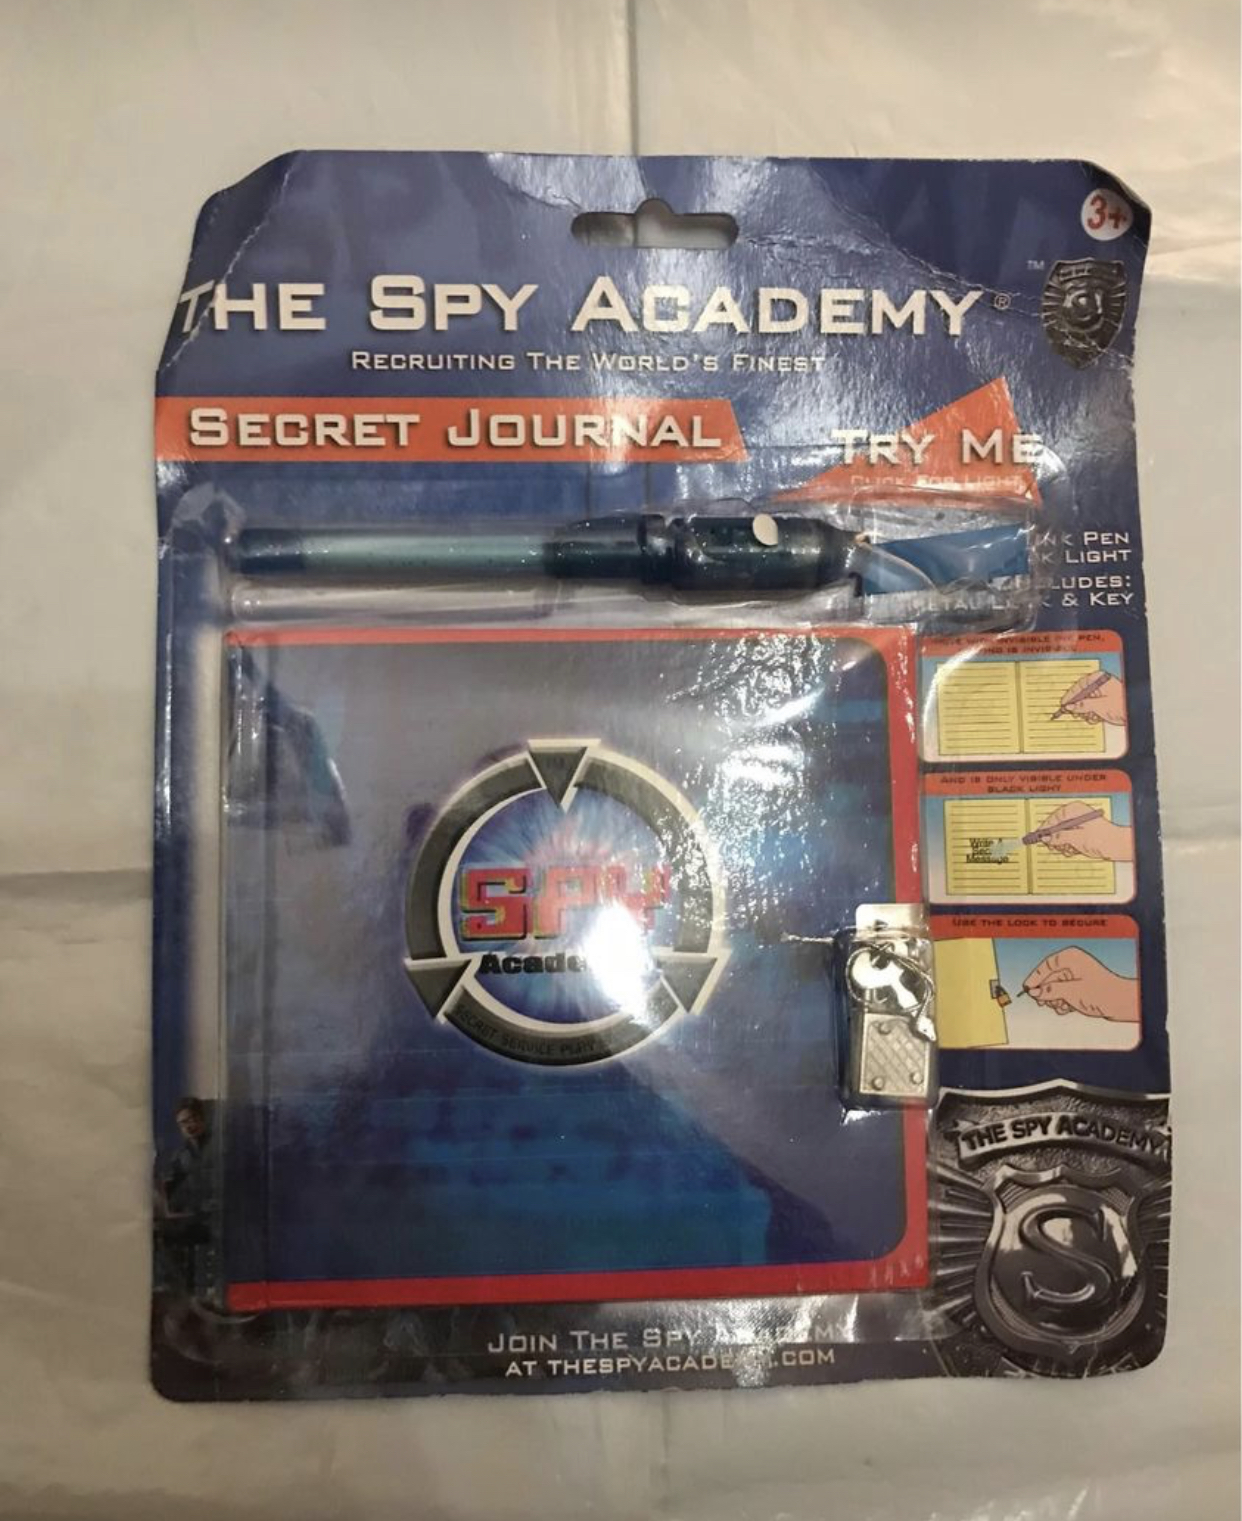 “The spy academy” secret journal